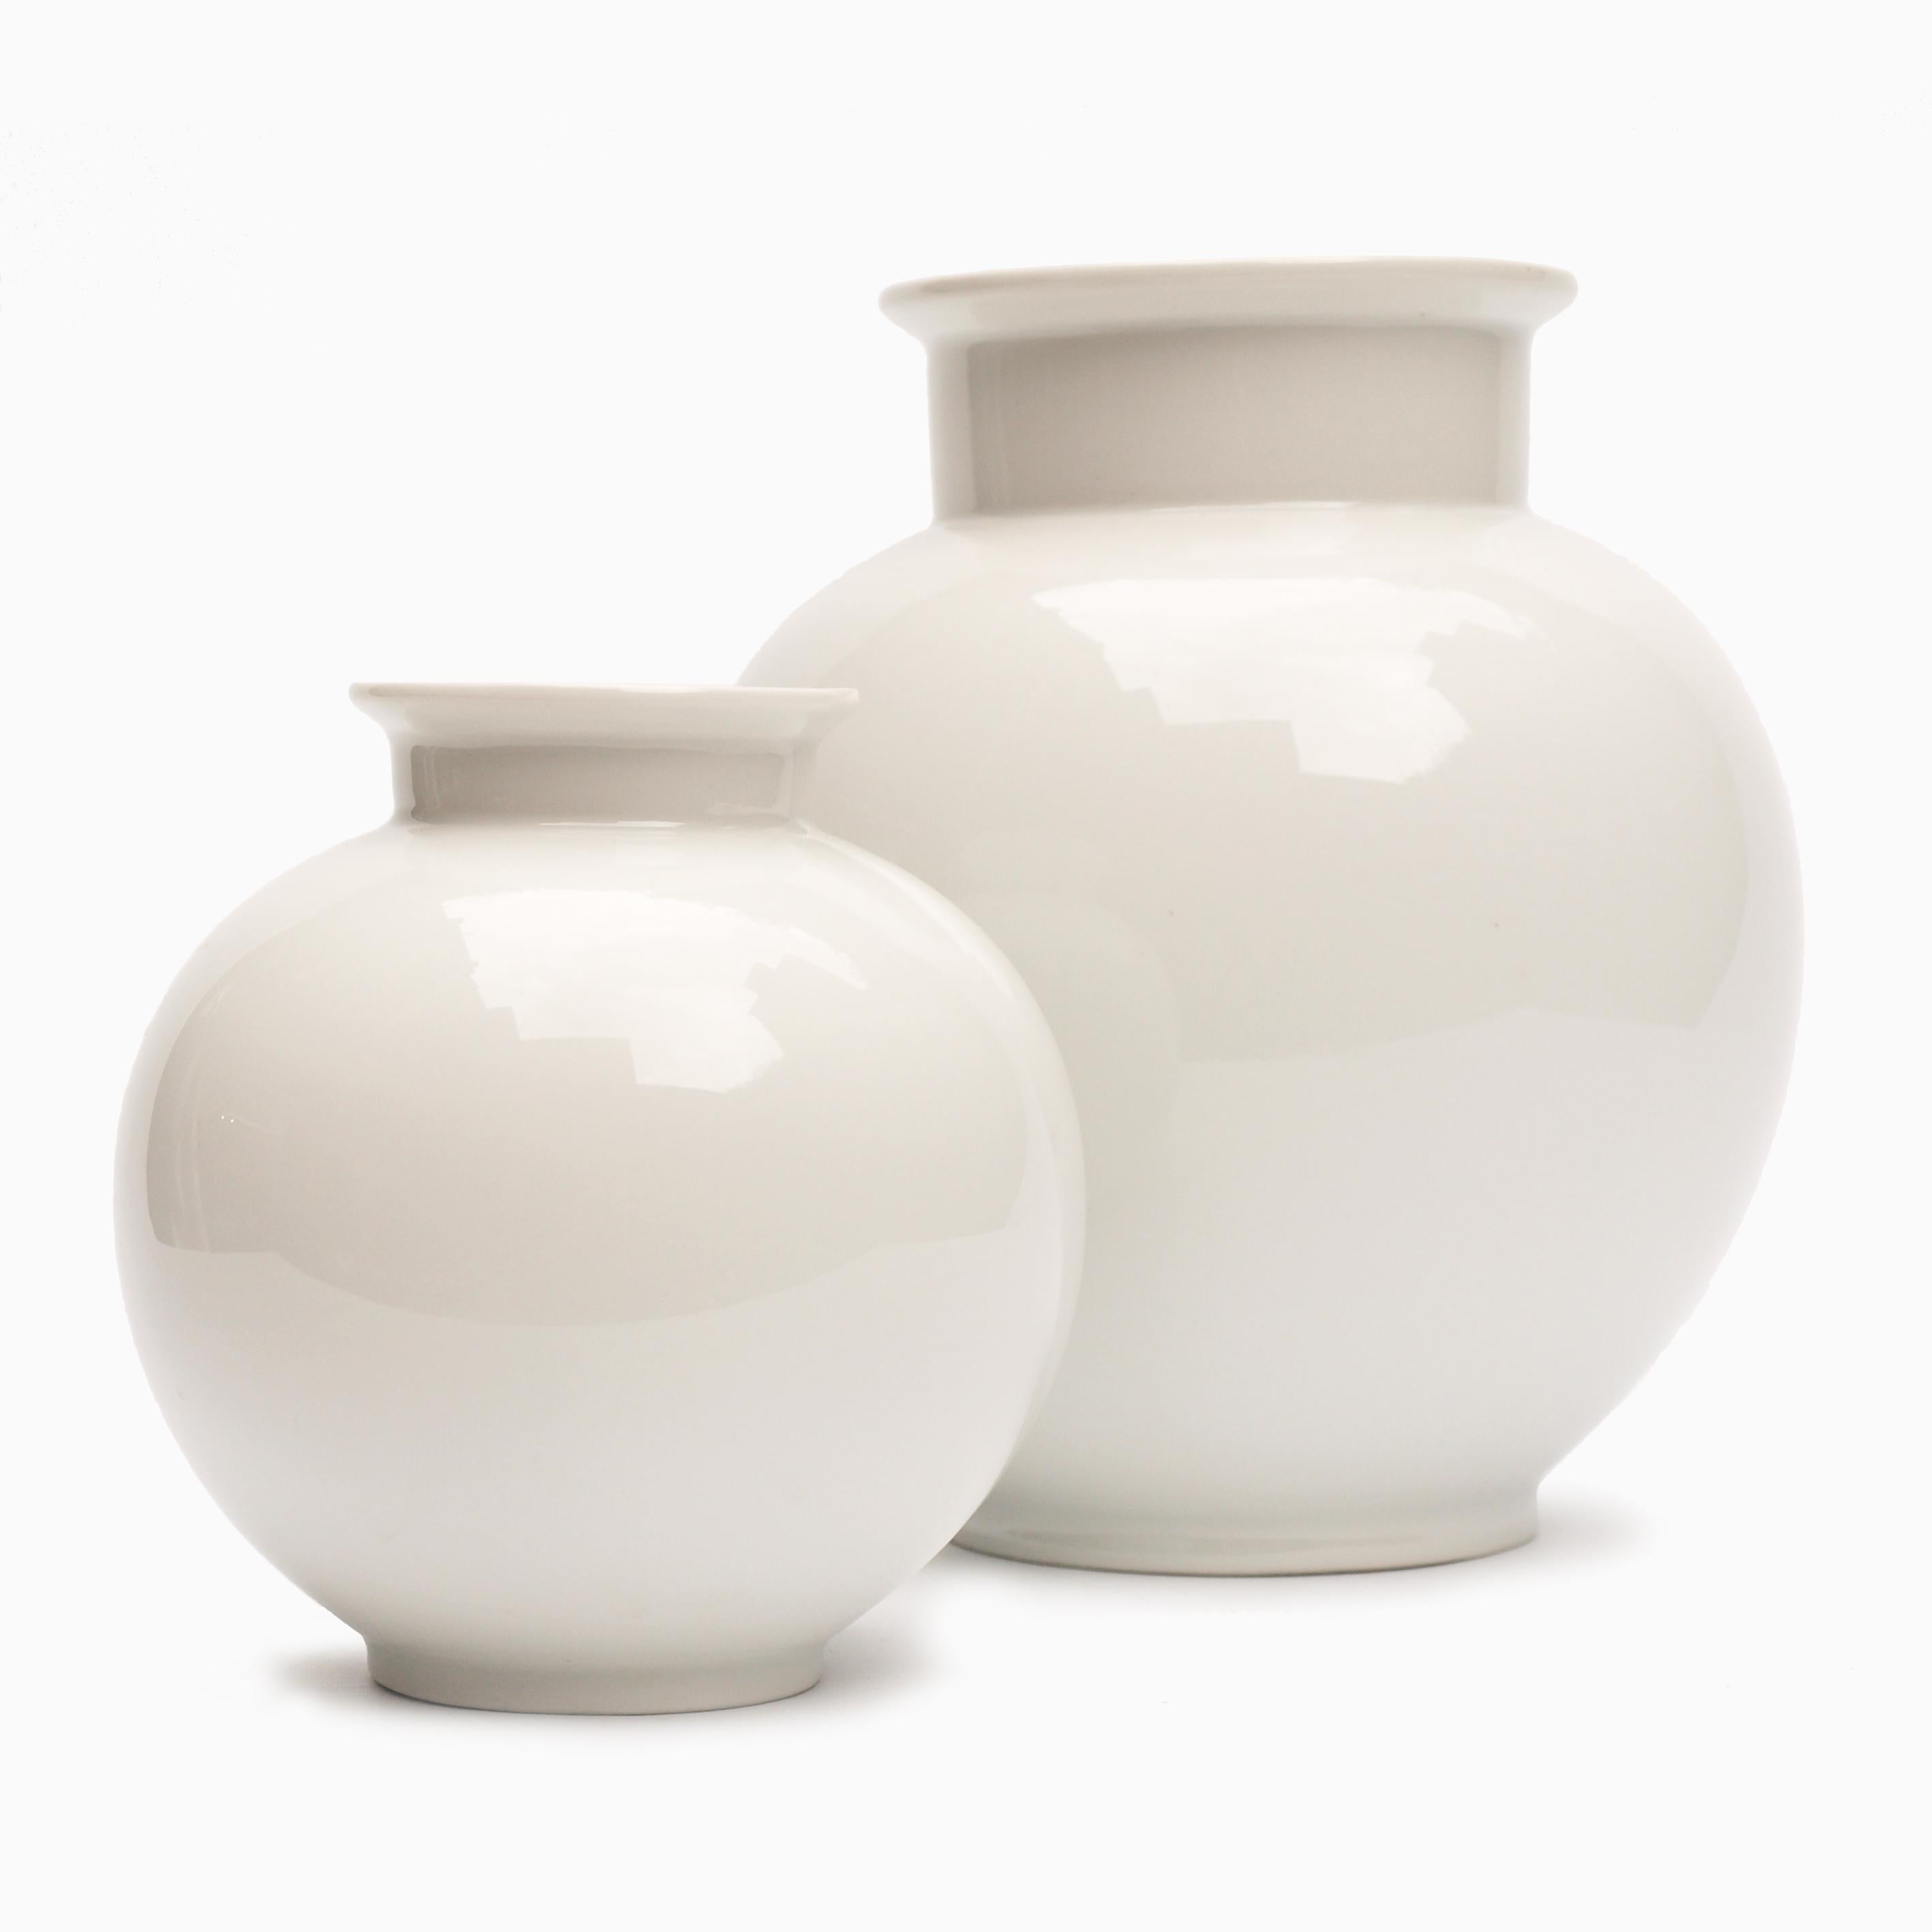 Pair of Porcelain Flower Vases by Thomas 10